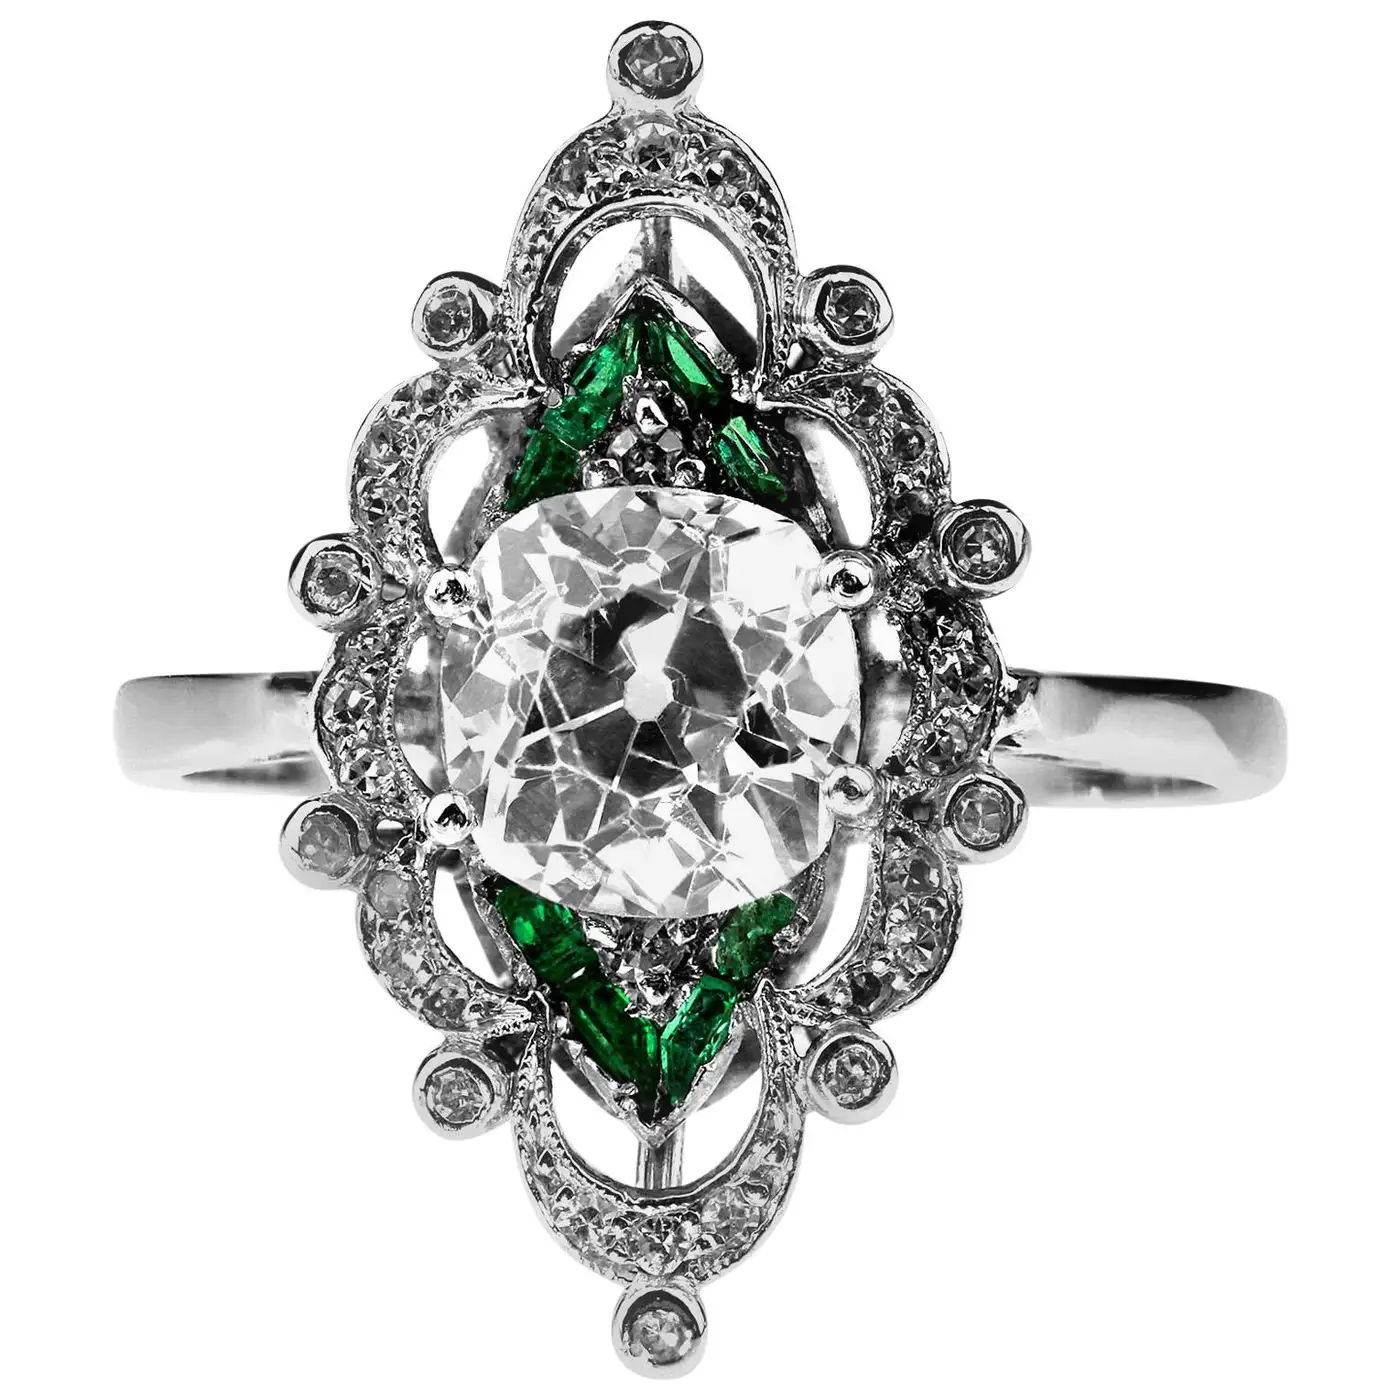 Antique-Edwardian-Old-Cut-Cushion-Diamond-2.0cts-Emerald-Ring-in-Platinum-1.webp